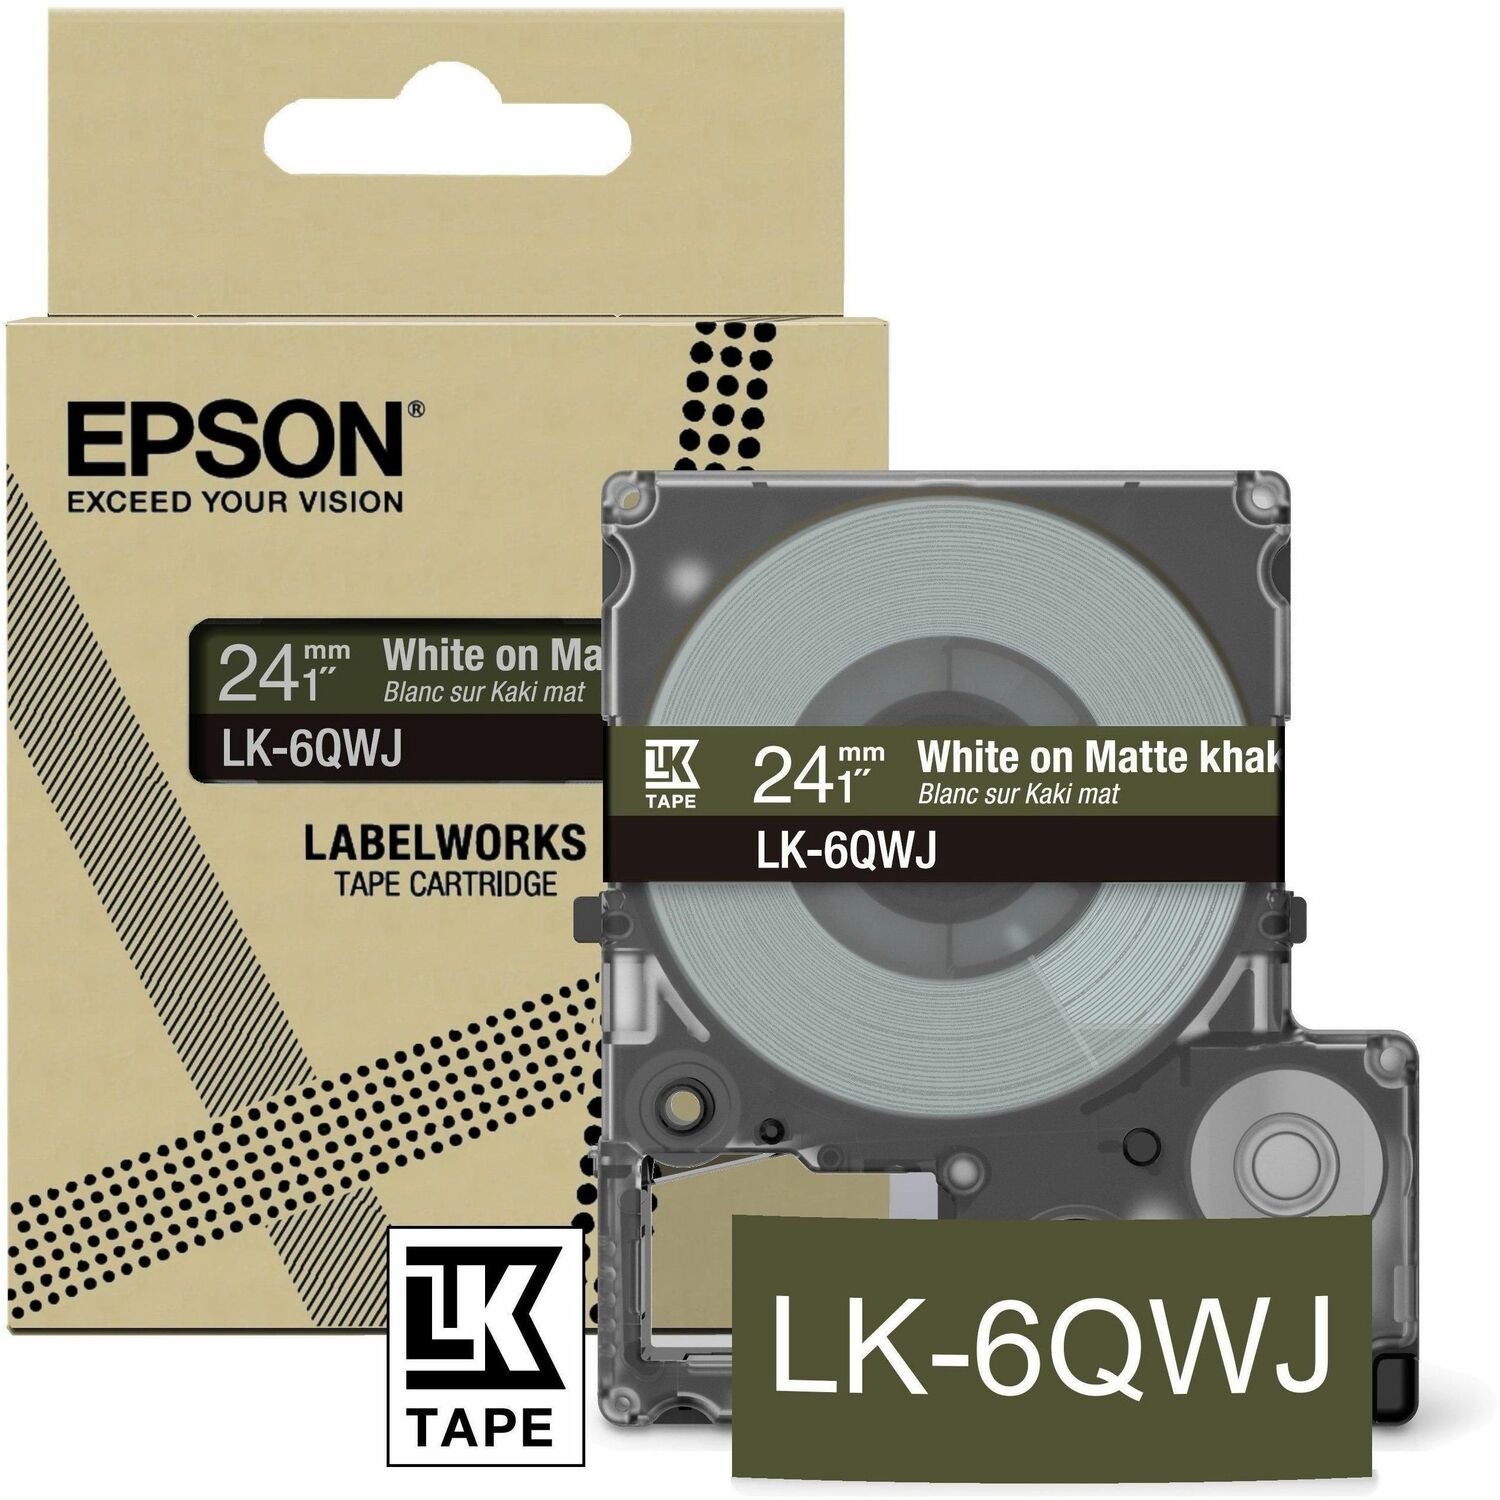 Epson LK-6QWJ Label Tape